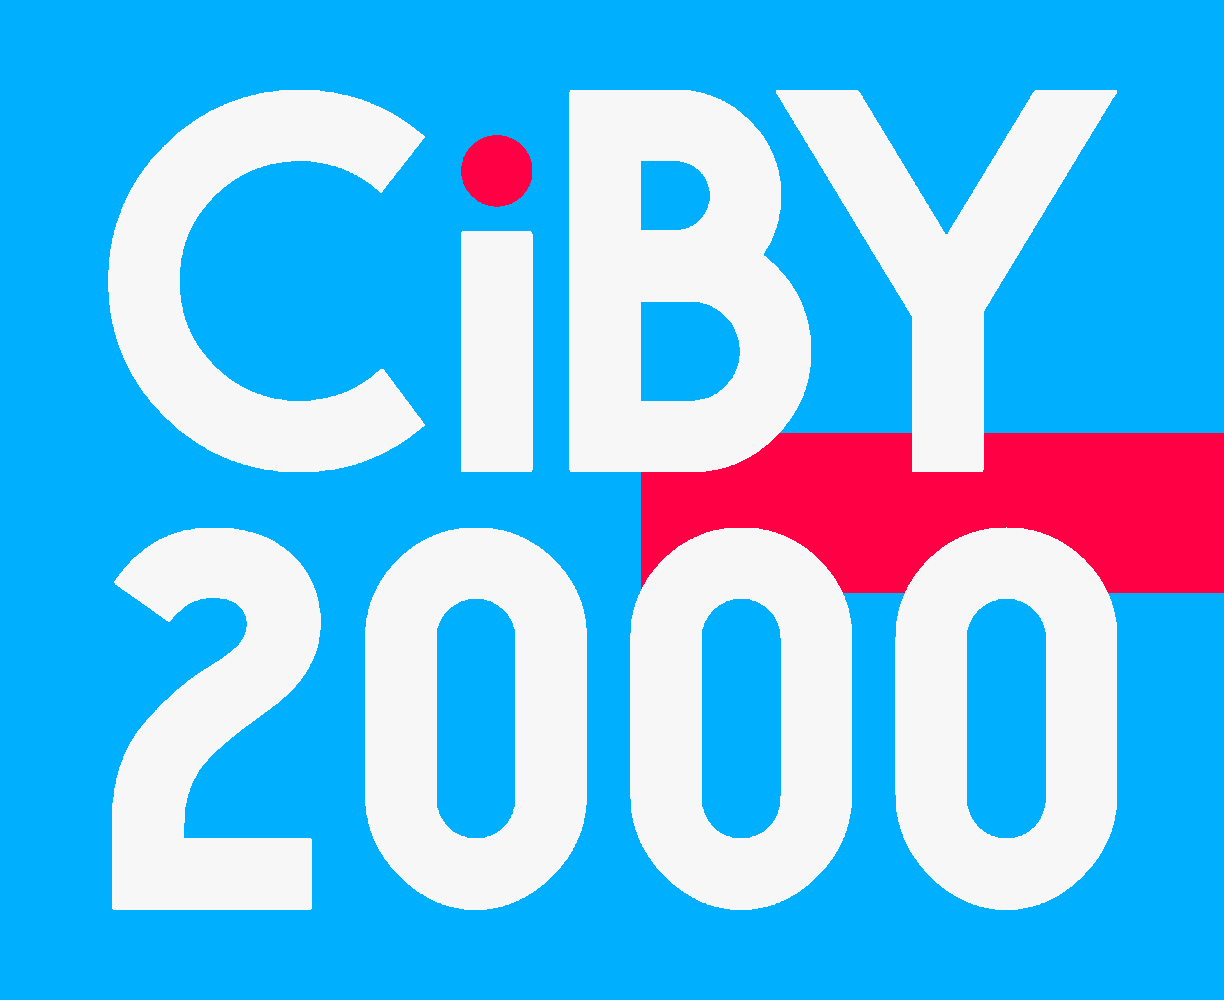 (ATL) CiBY 2000 logo.png